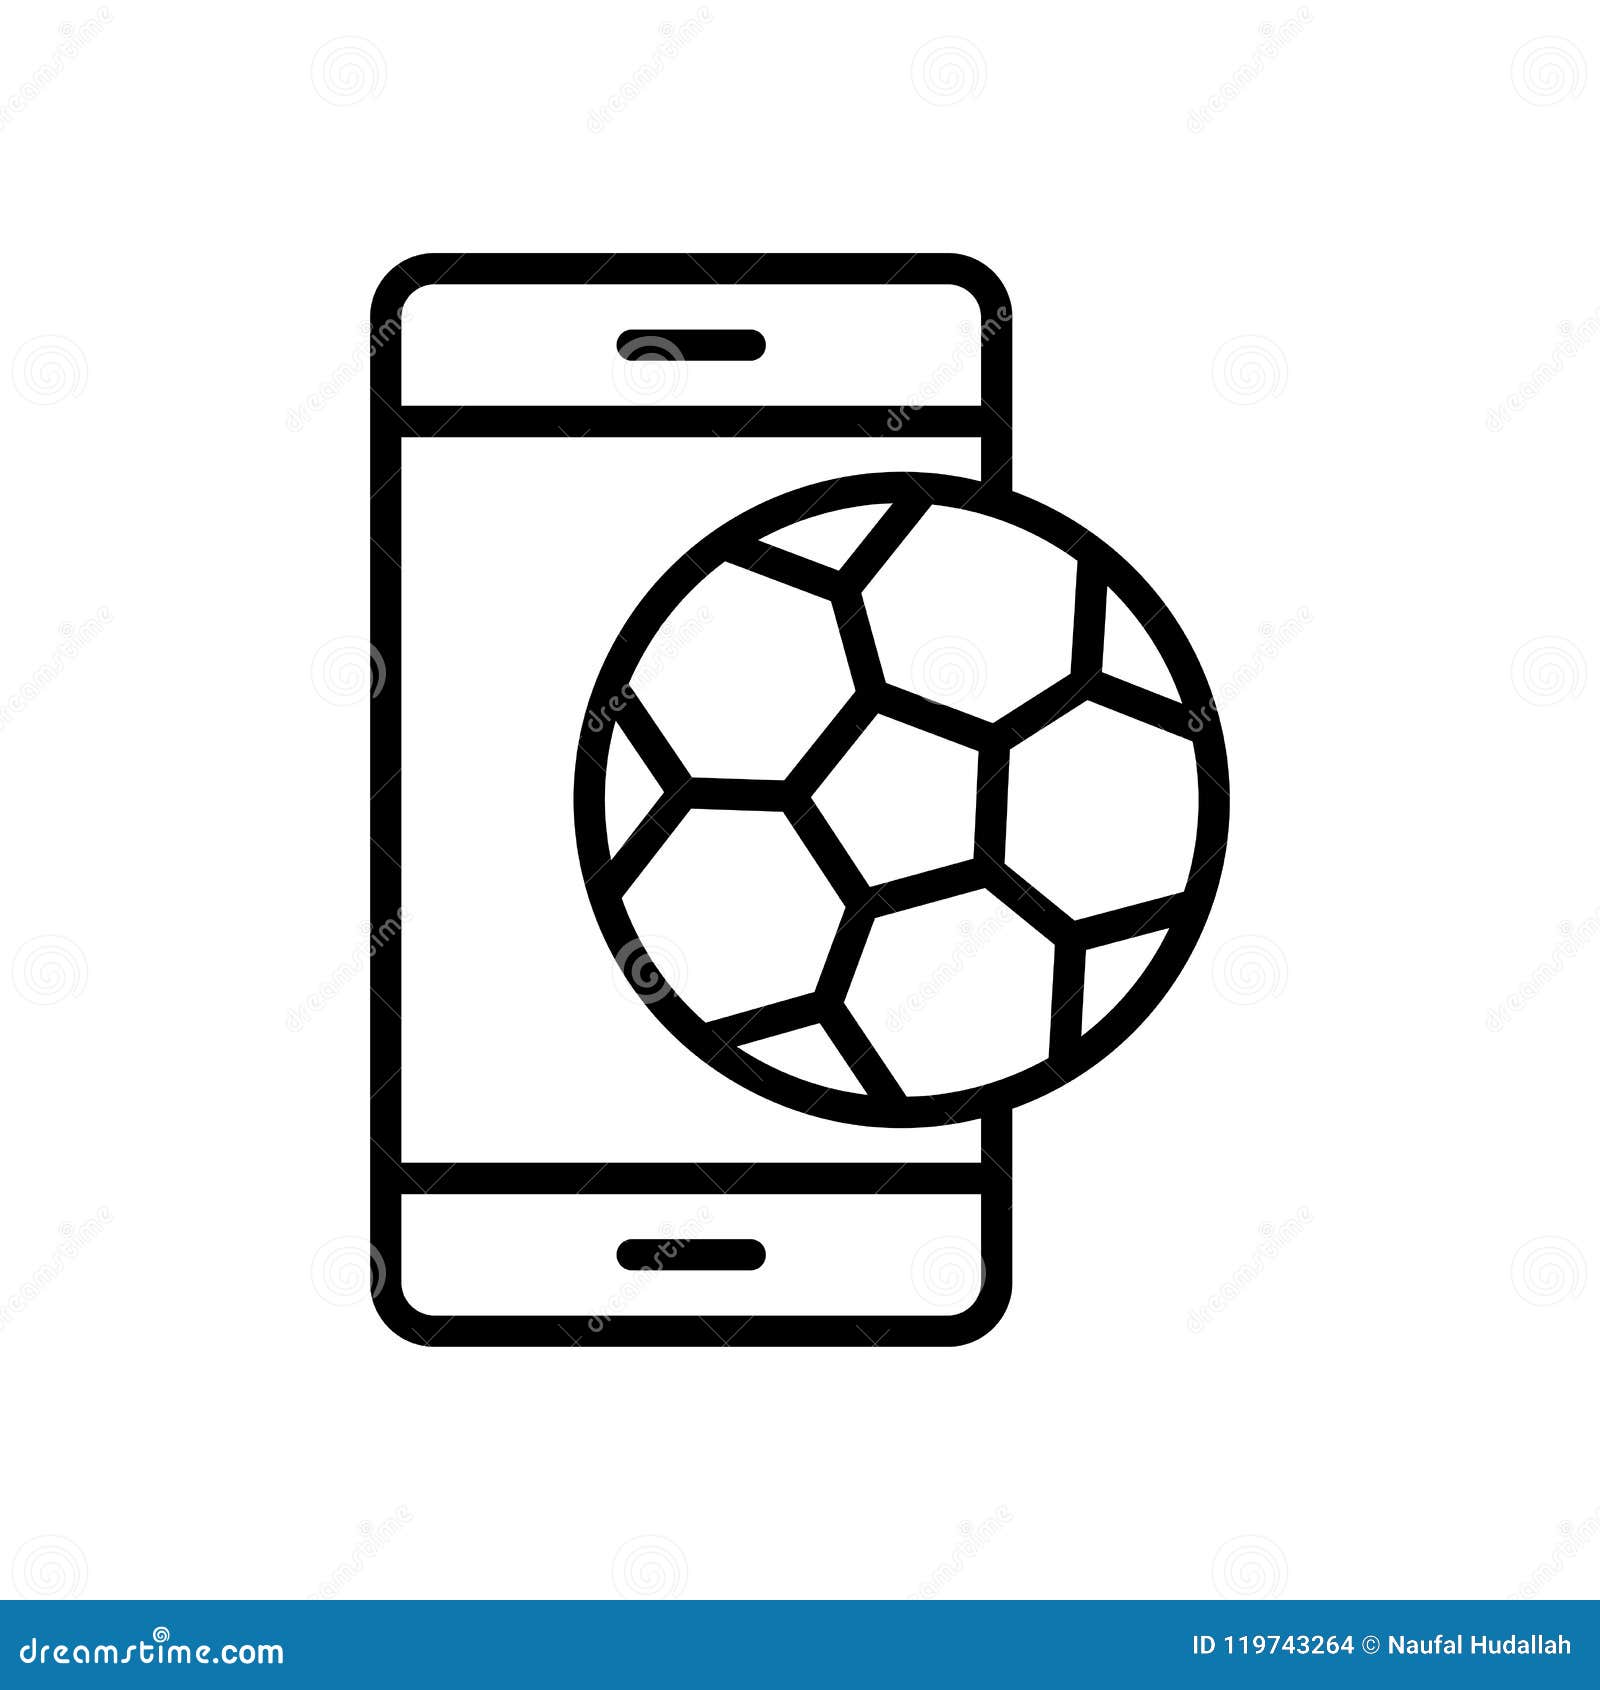 Football Mobile Application Icon